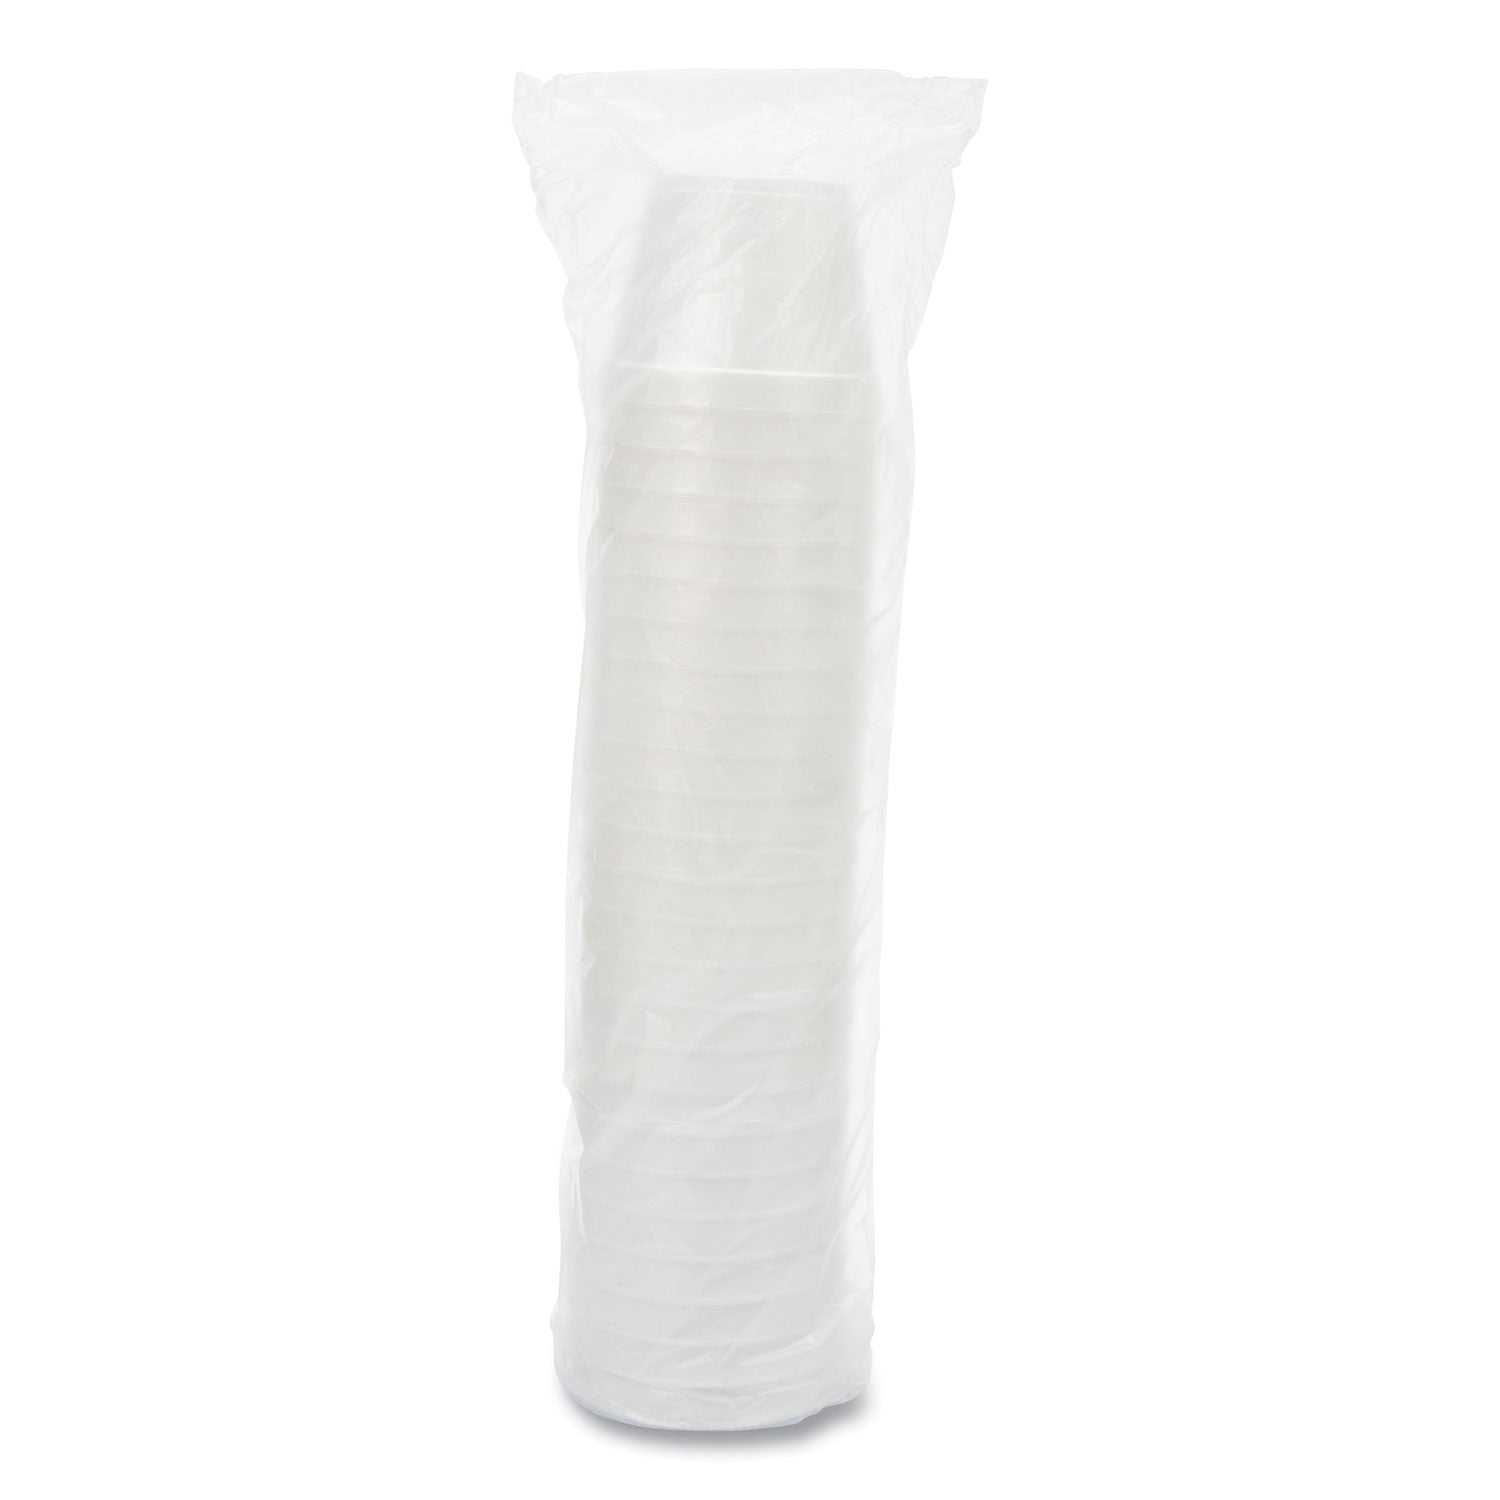 Foam Containers, 24 oz, White, 25/Bag, 20 Bags/Carton - 